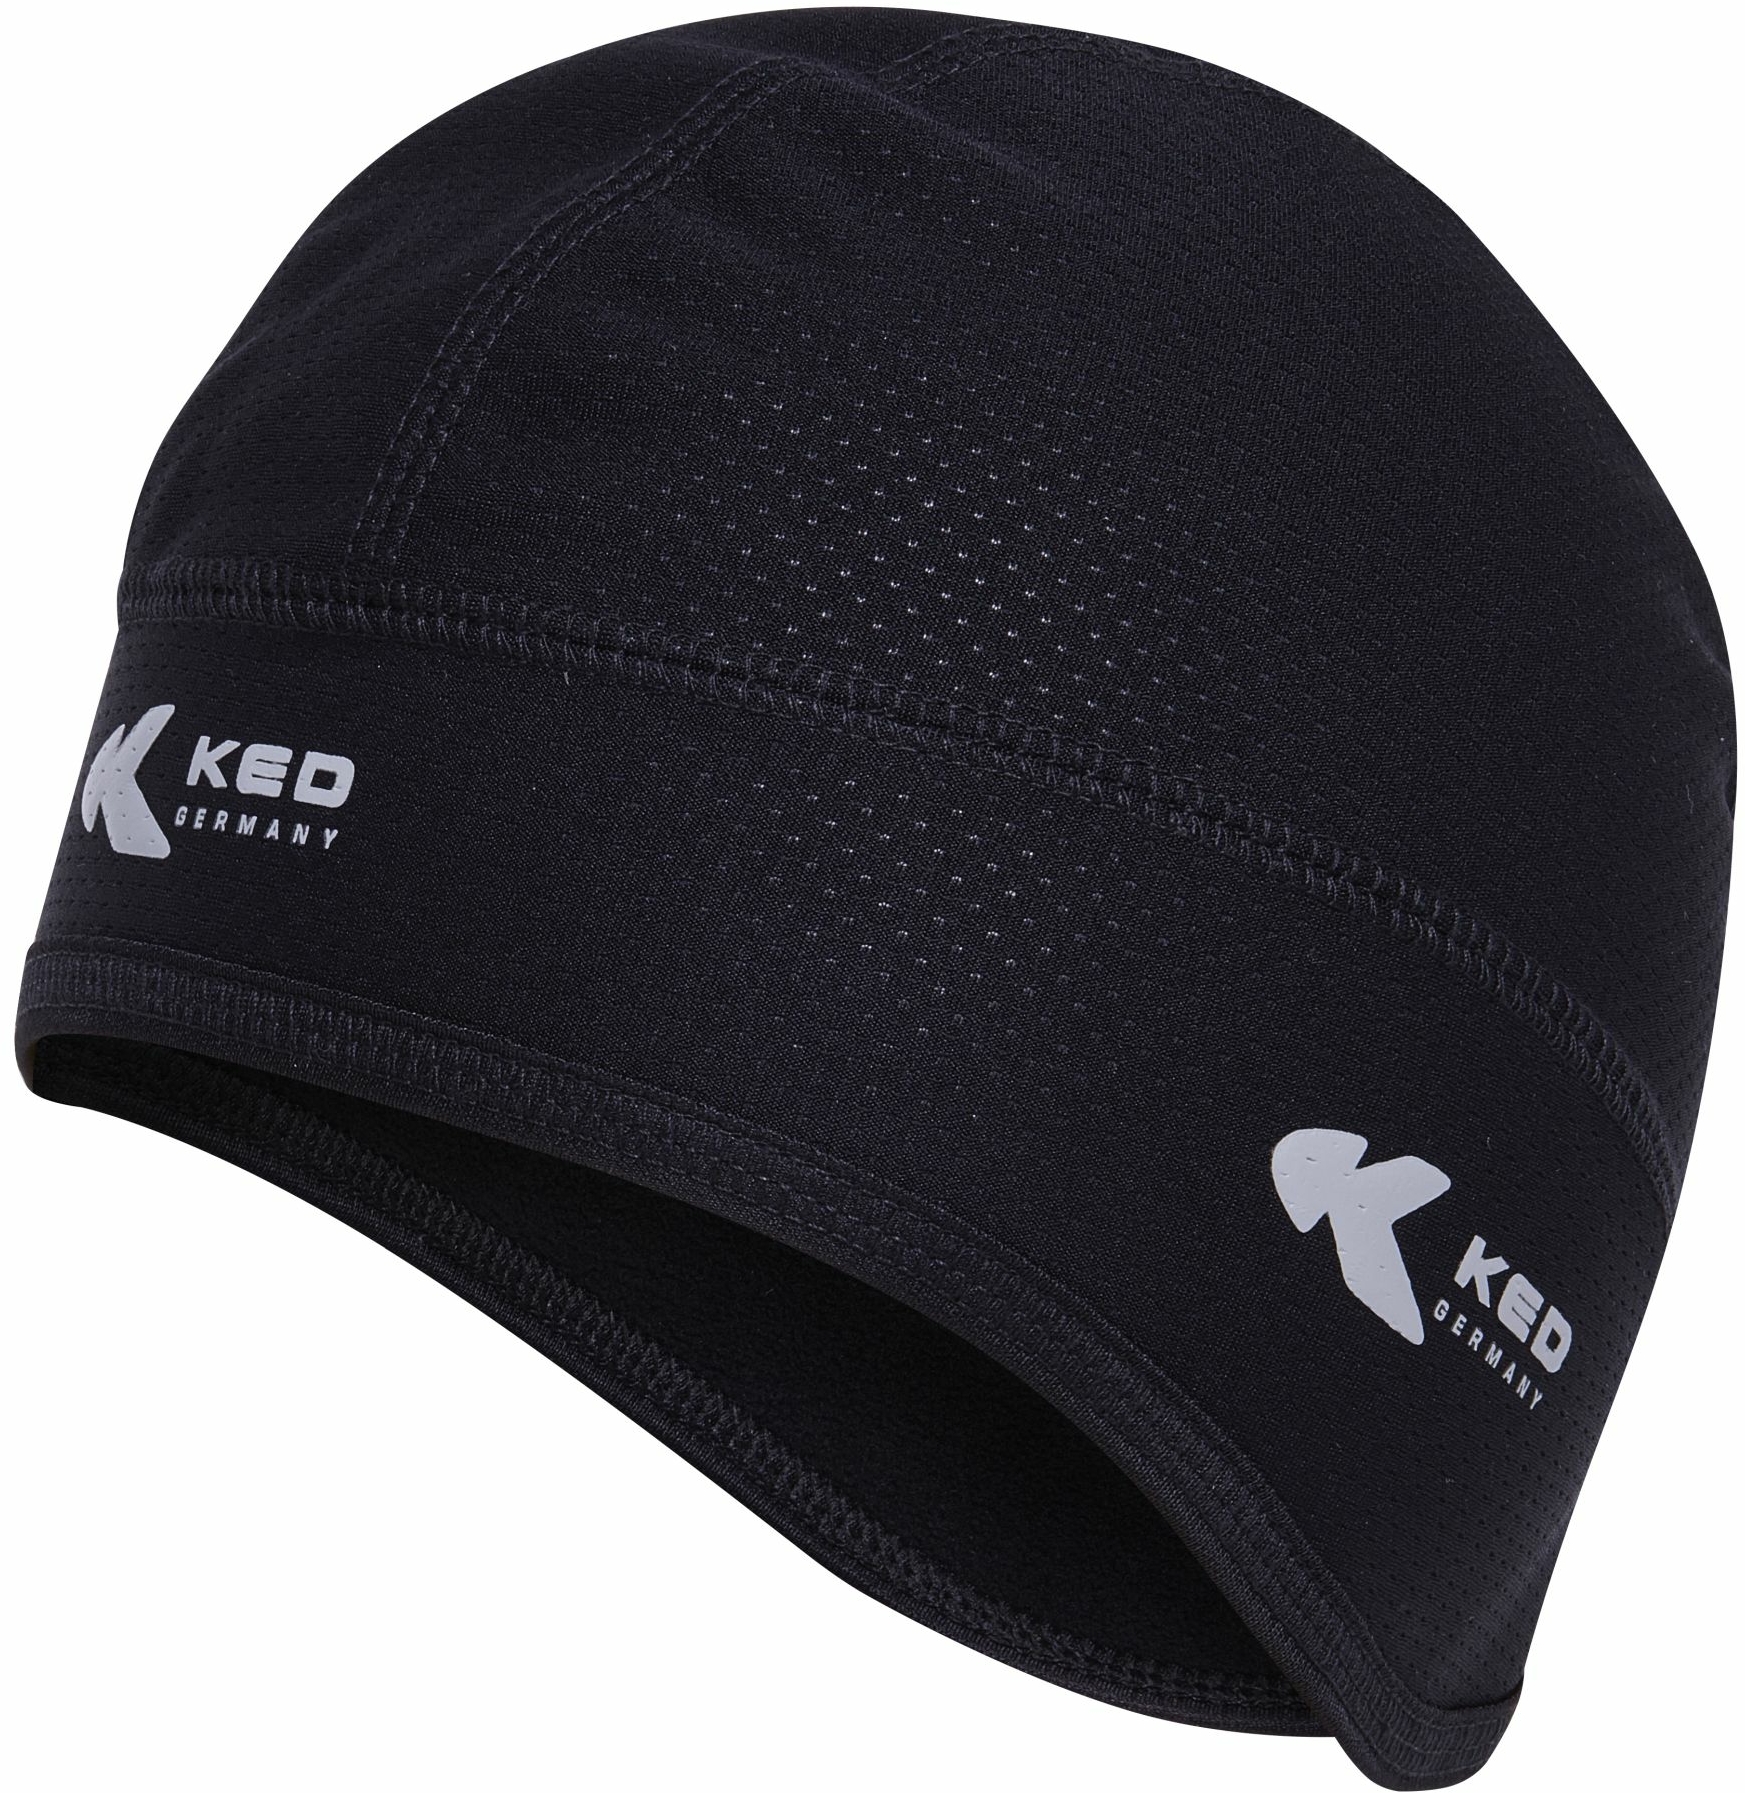 Bekleidung/Accessoires: KED  Fahrradhelme - Zubehör Helmuntermütze LXL 